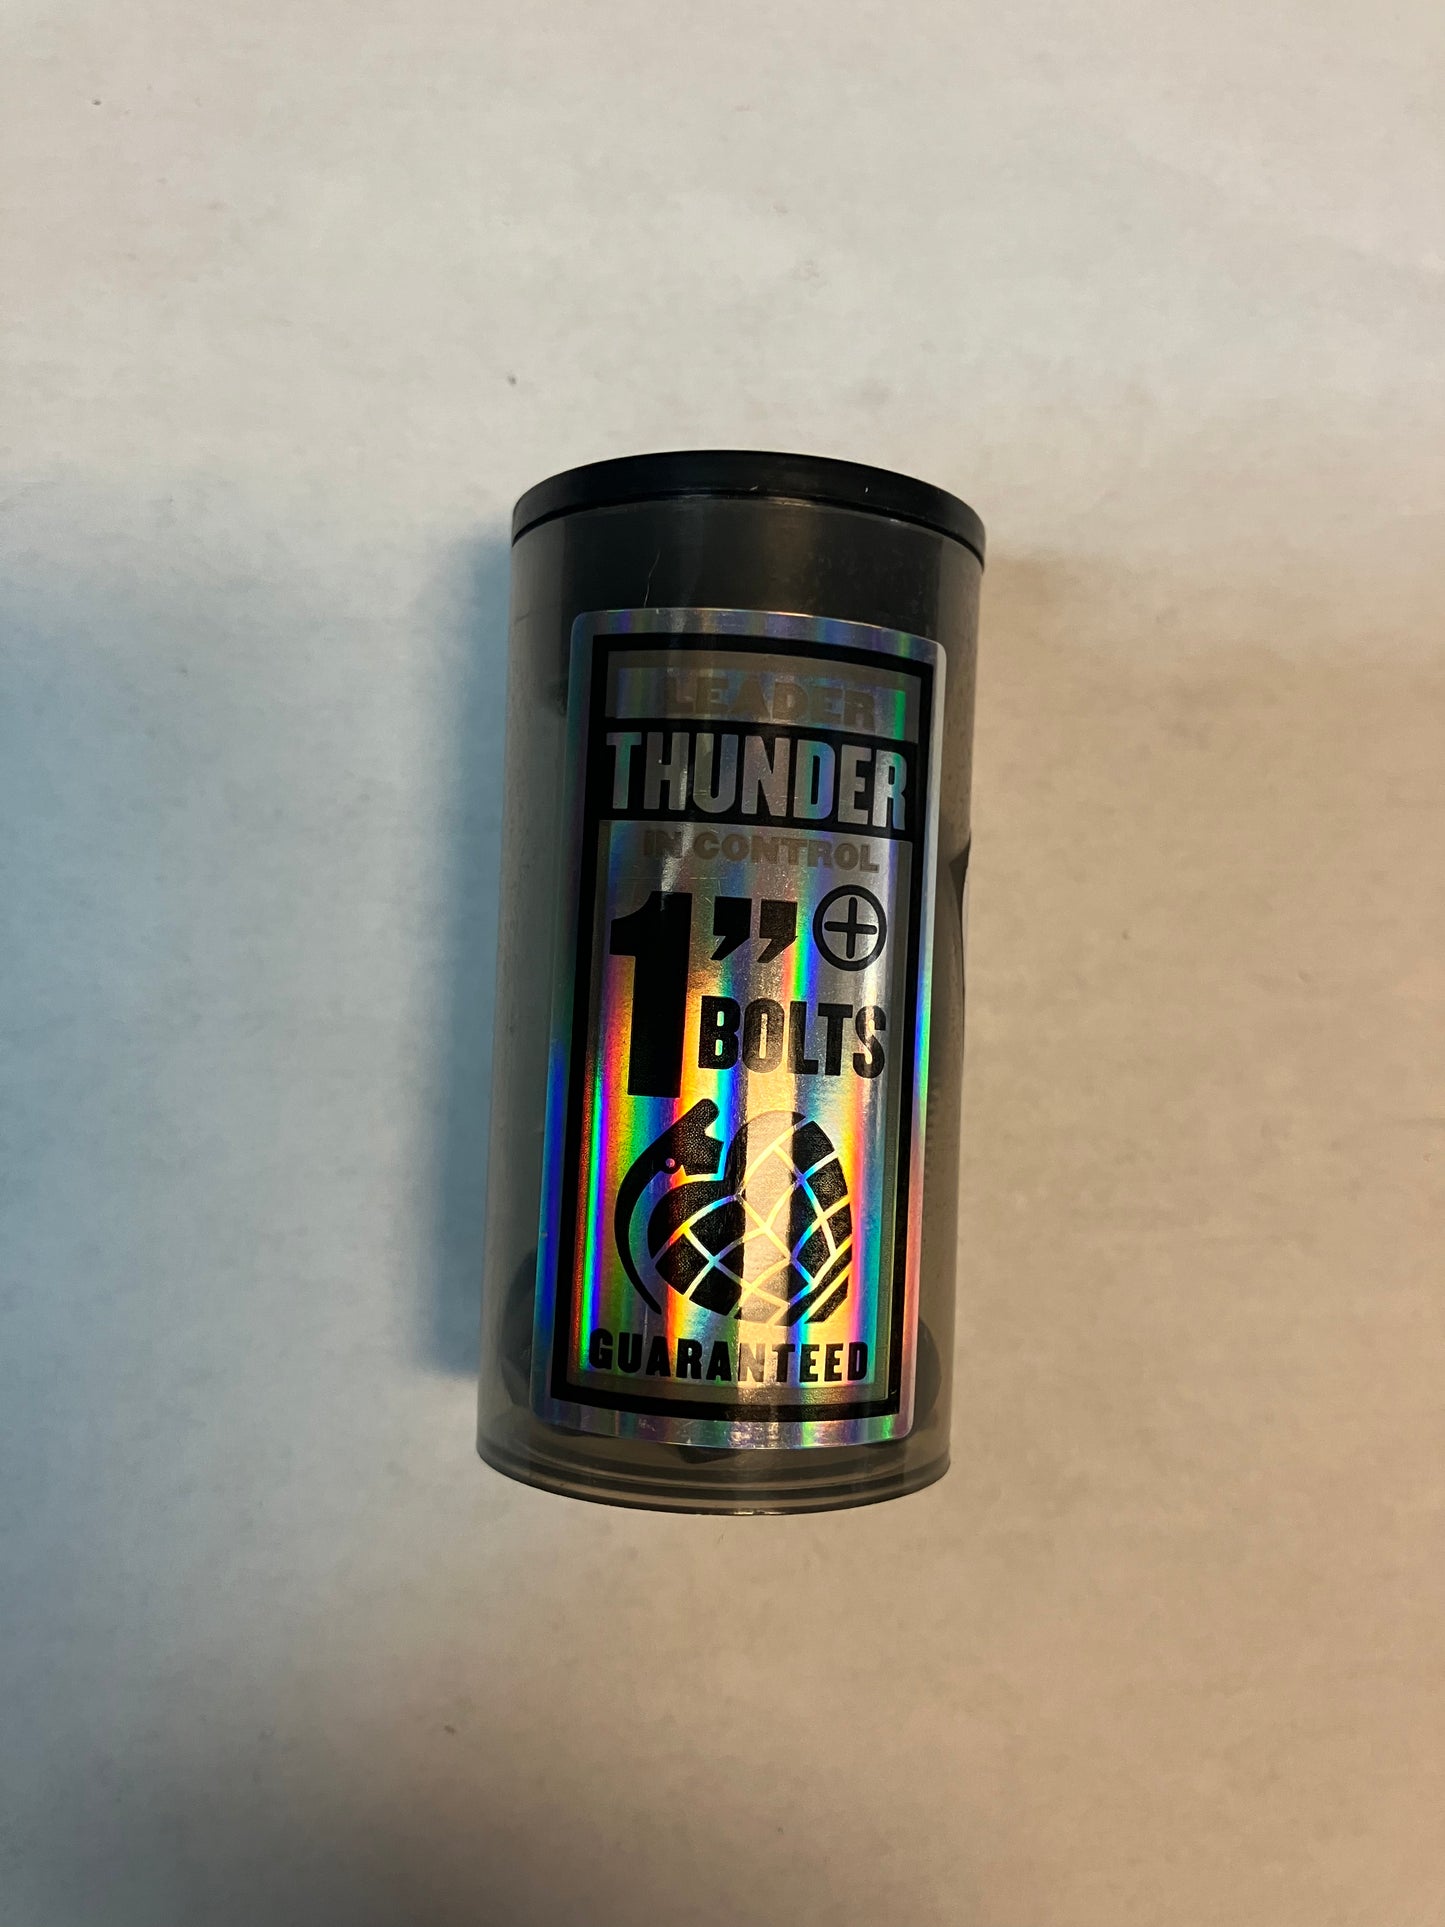 Thunder Hardware 1” Phillips color 2 silver & 8 black